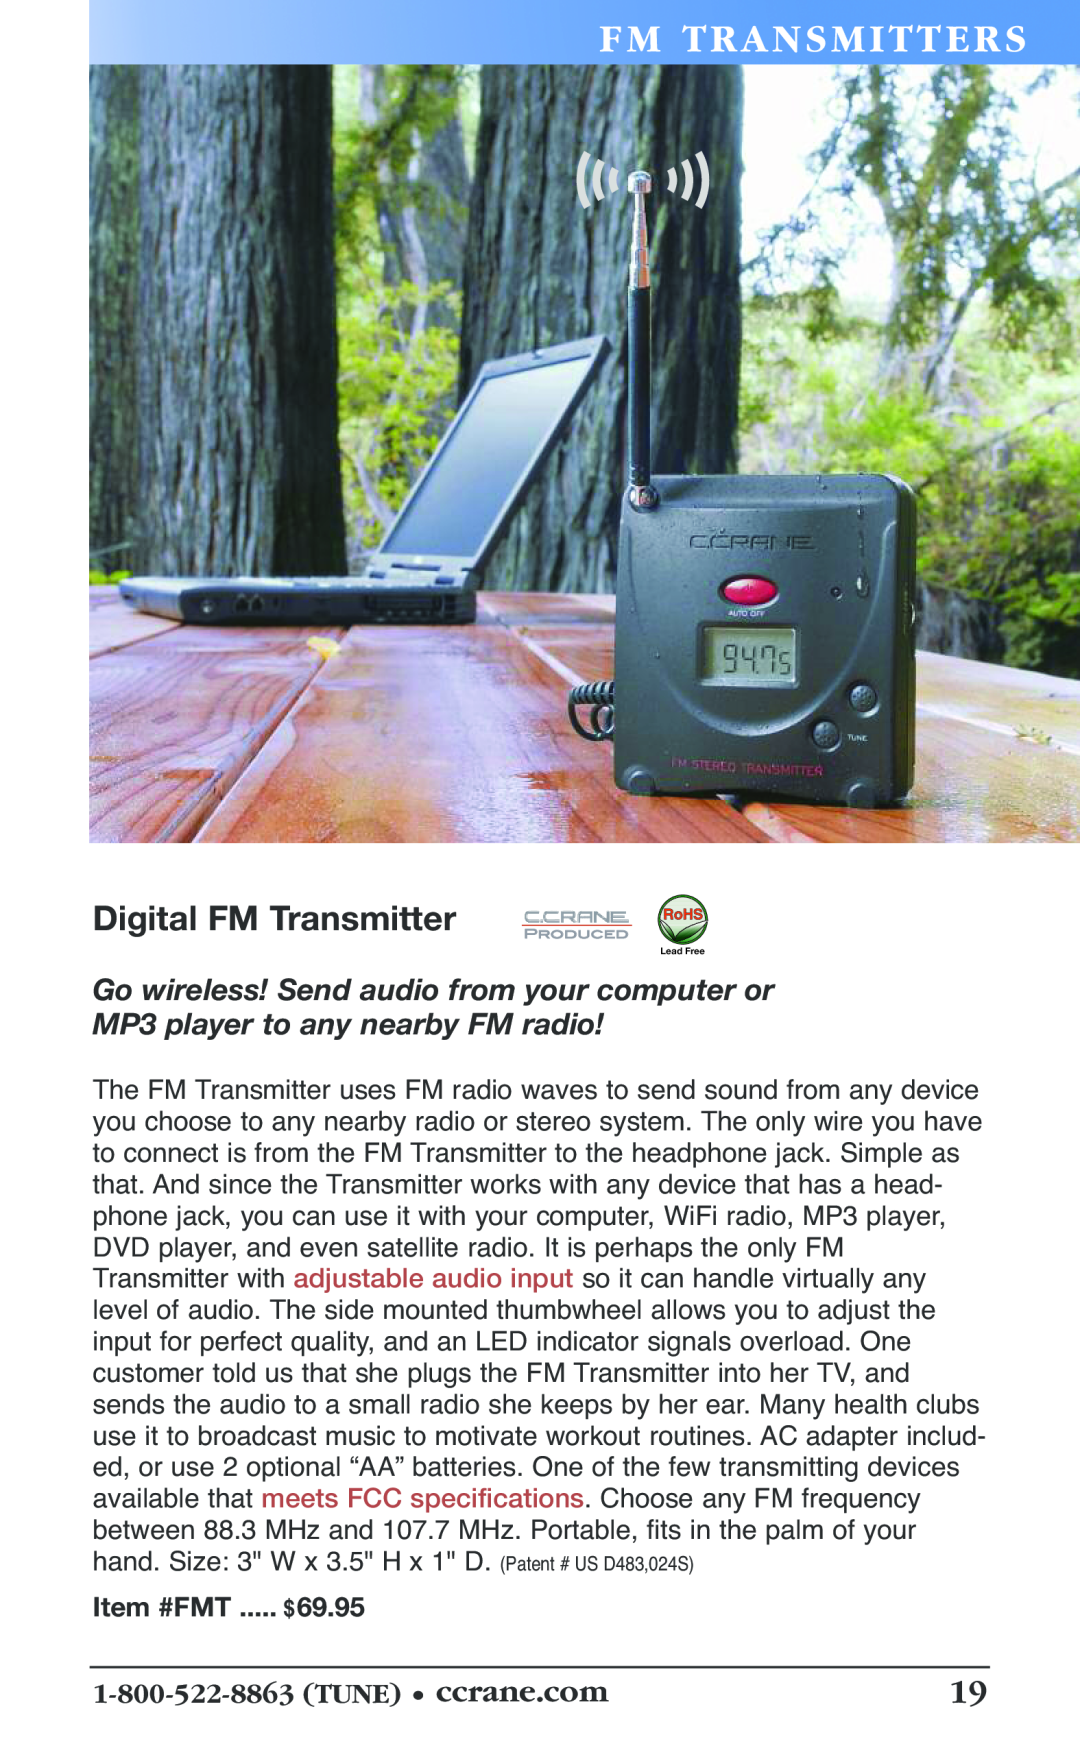 C. Crane 19f manual Fm Tran Smi Tt Ers, Digital FM Transmitter, Item #FMT ..... $69.95, 1-800-522-8863TUNE • ccrane.com 